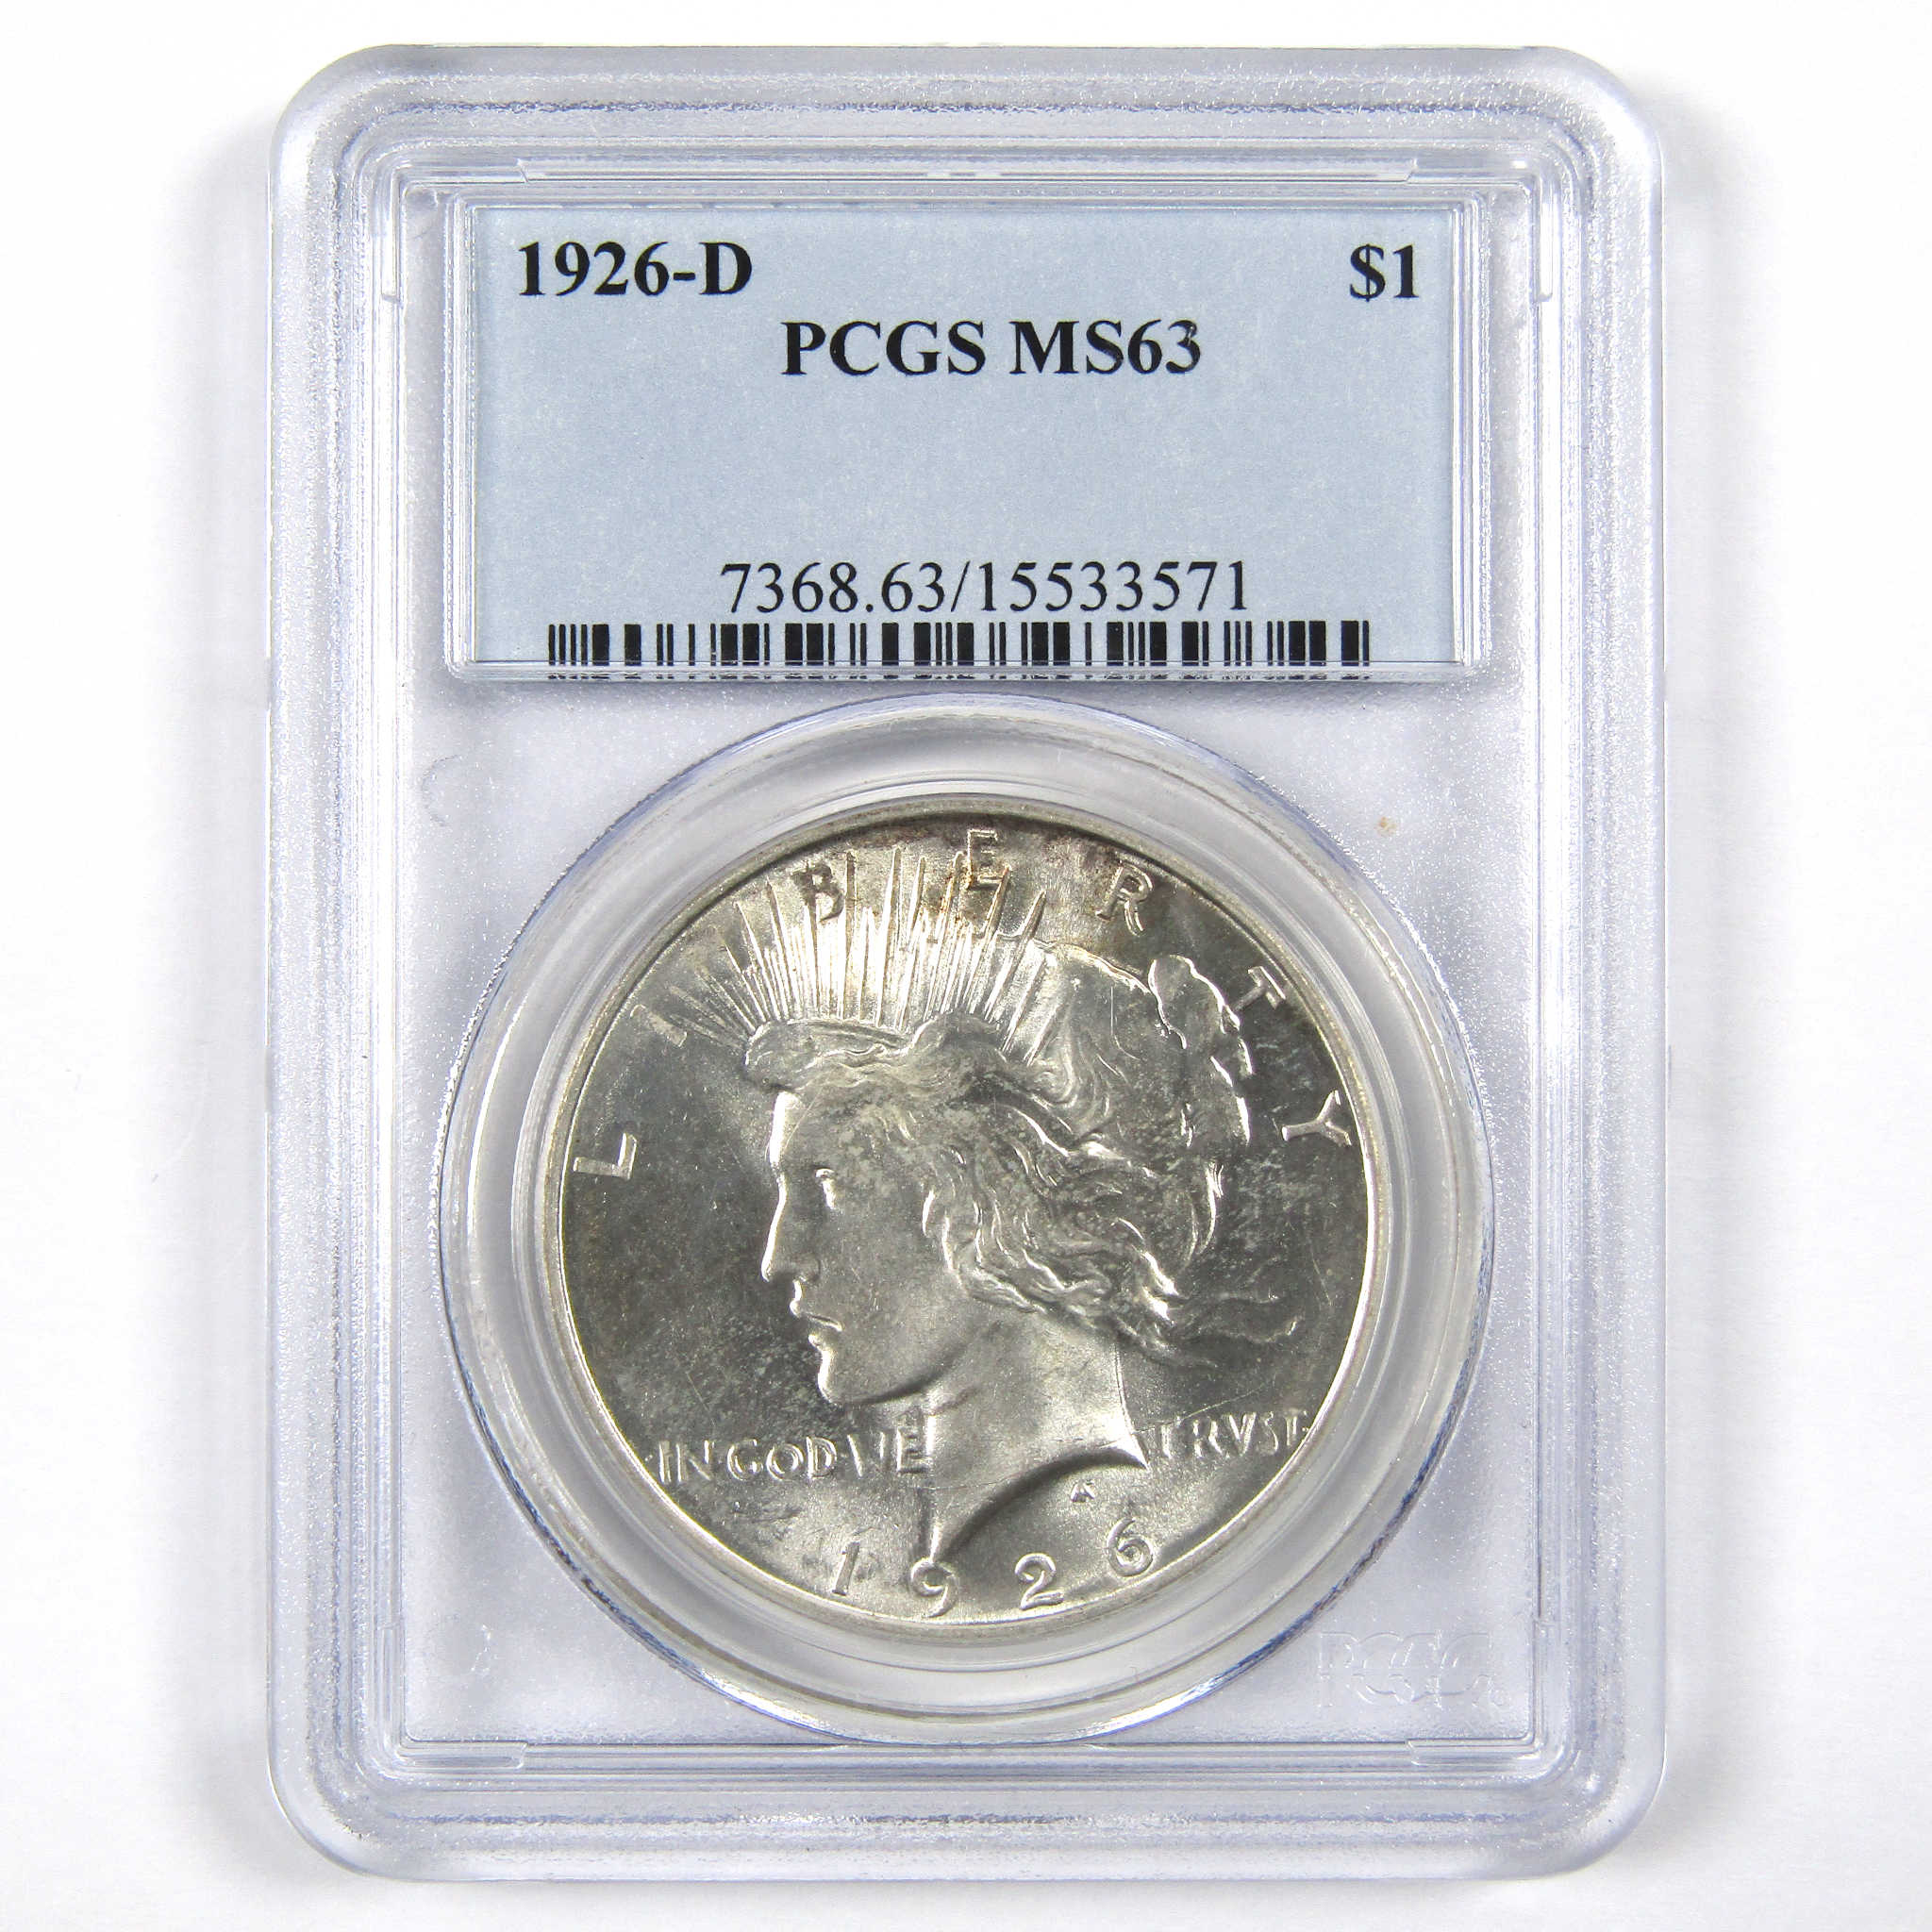 1926 D Peace Dollar MS 63 PCGS 90% Silver $1 Uncirculated SKU:I9245